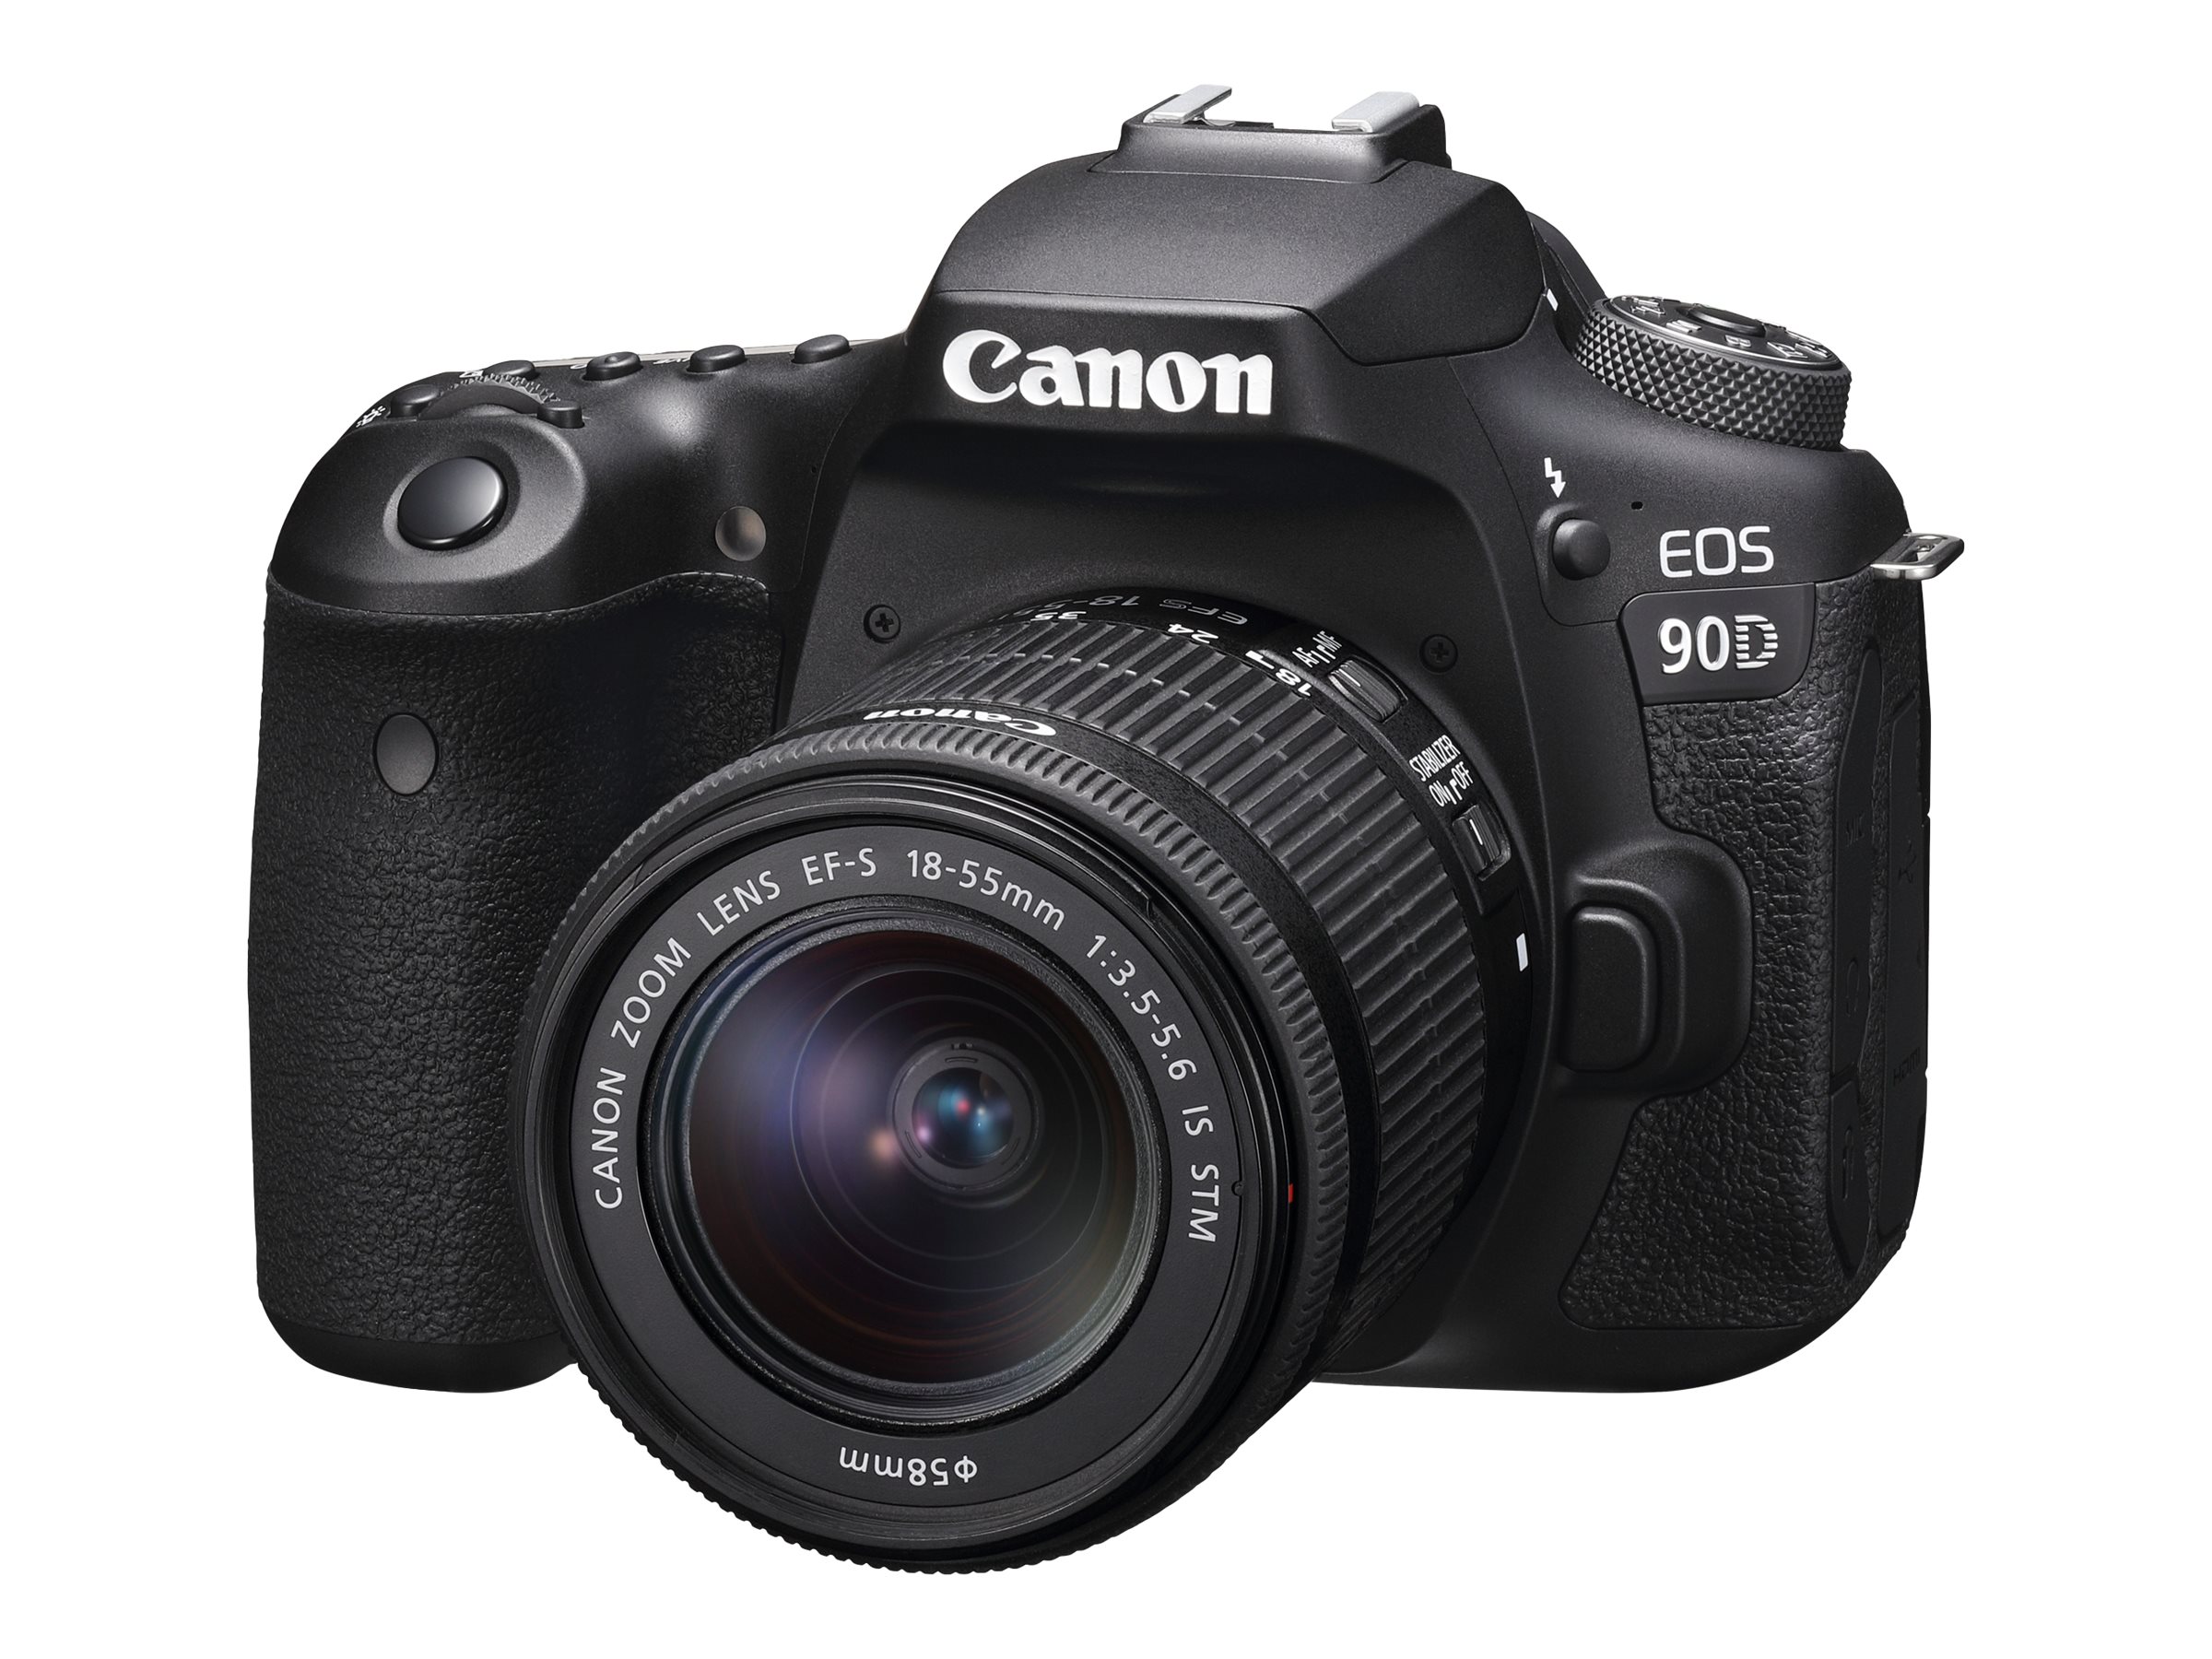 Canon EOS 90D - Digital camera - SLR - 32.5 MP - 4K / 30 fps - 3x optical zoom EF-S 18-55mm IS STM lens - Wi-Fi, Bluetooth - image 1 of 4